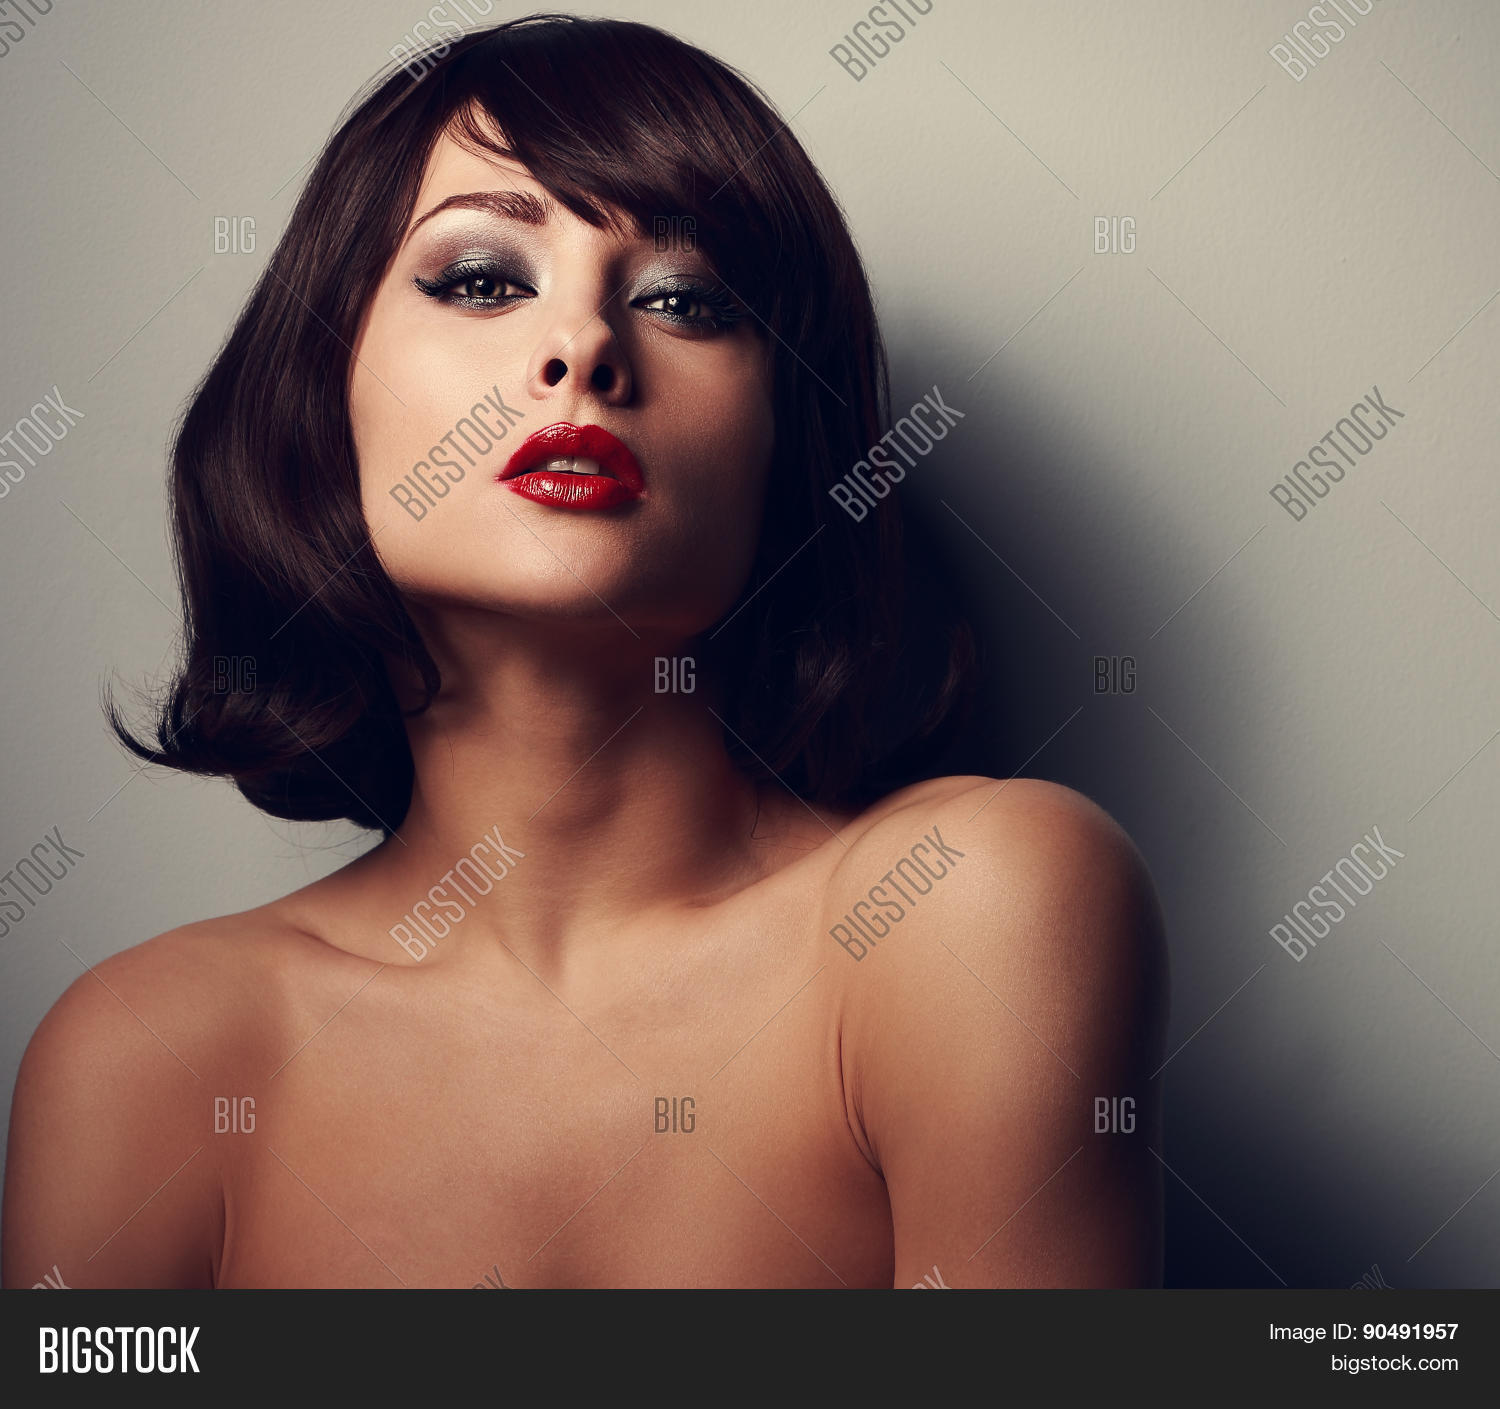 Sexy Hot Makeup Woman Black Hair Image & Photo | Bigstock